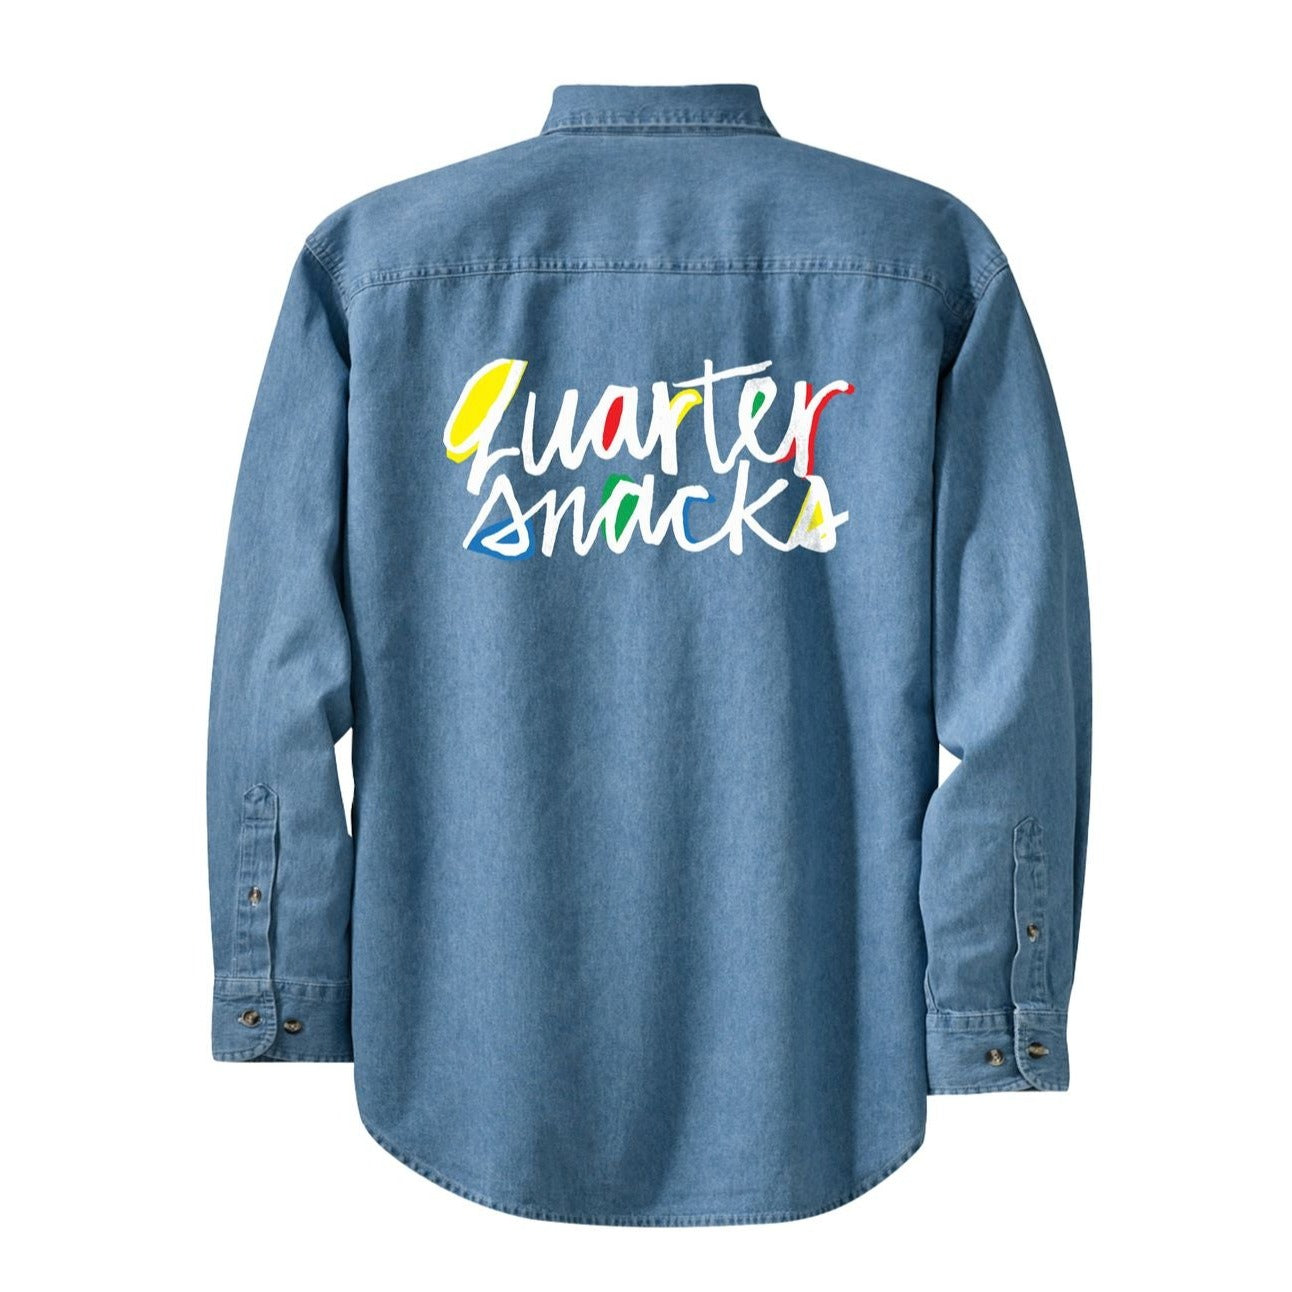 Quartersnacks Pop Art Denim Shirt